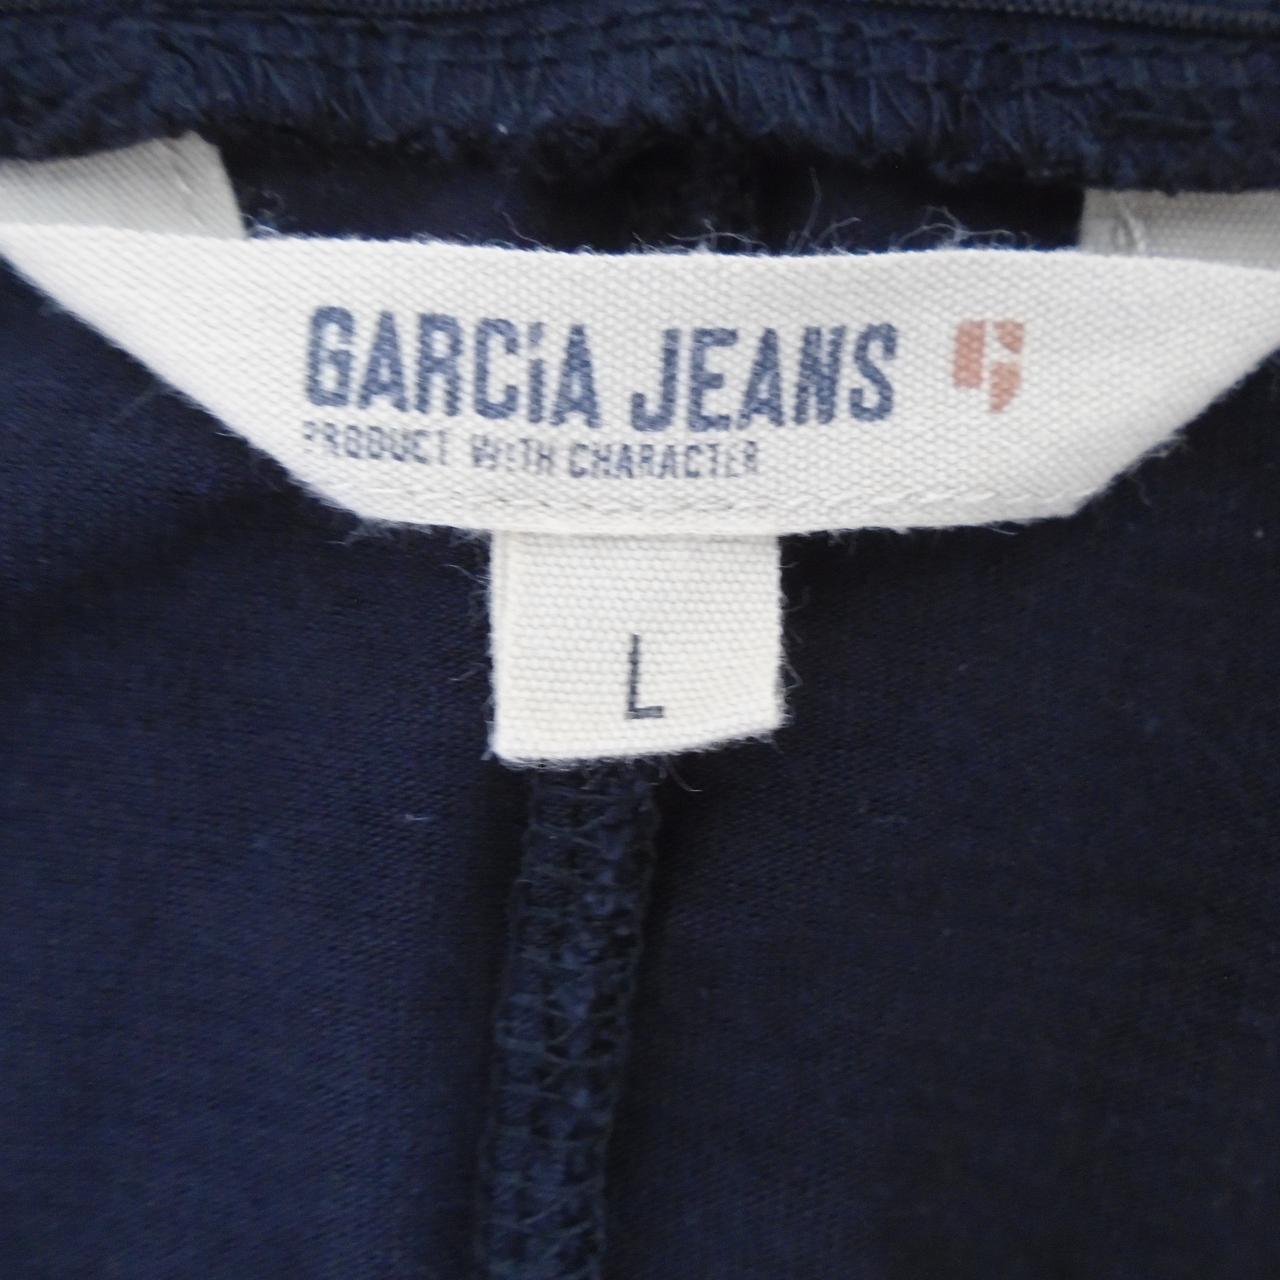 Women's Pants Garcia Jeans. Black. L. Used. Good